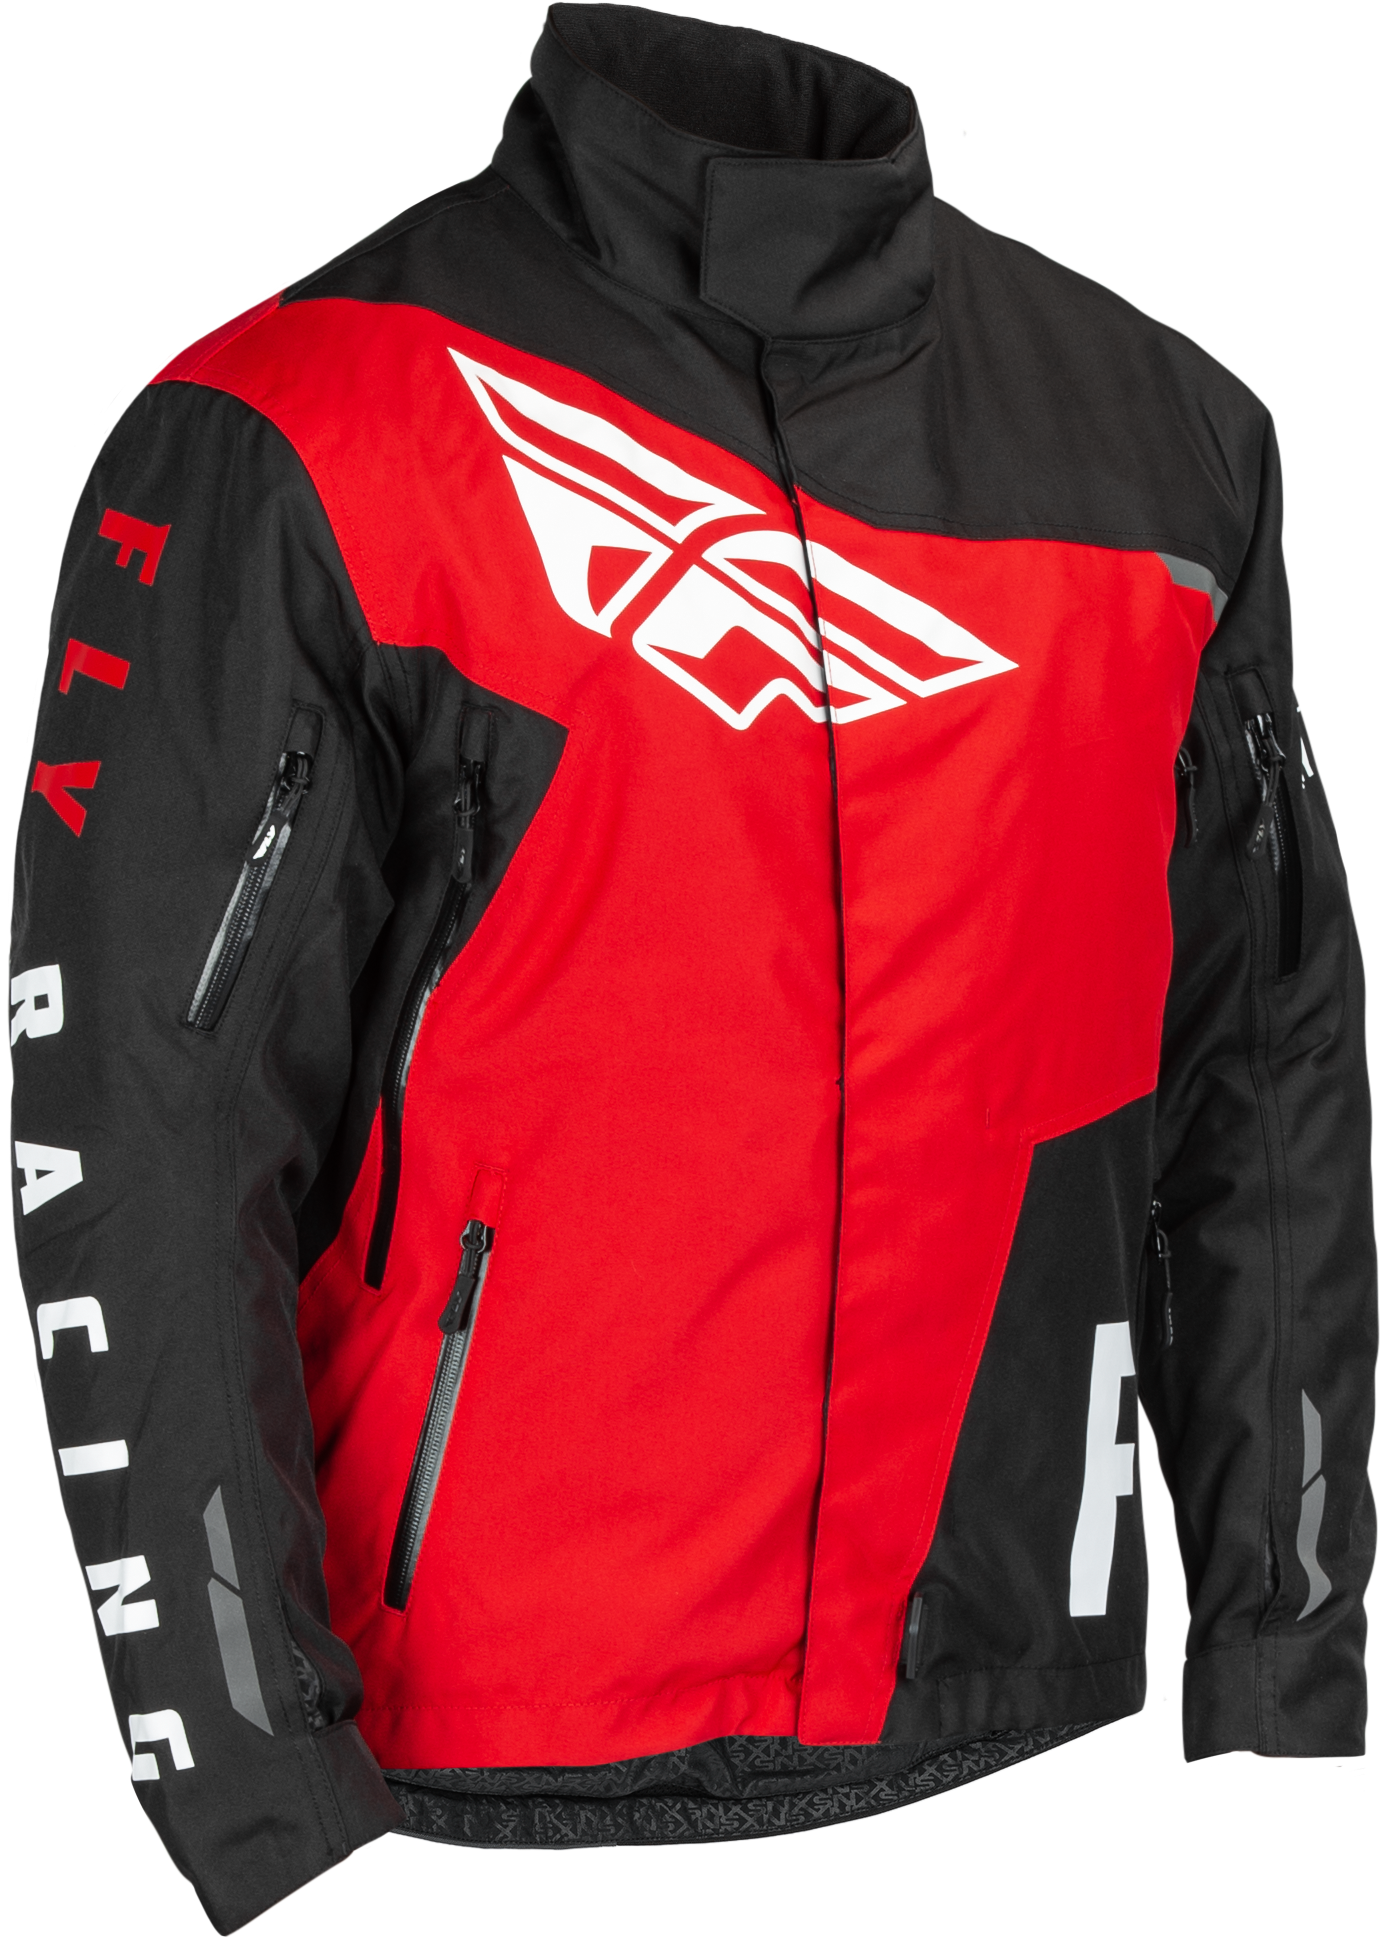 FLY RACING Snx Pro Jacket Black/Red Xl 470-5402X